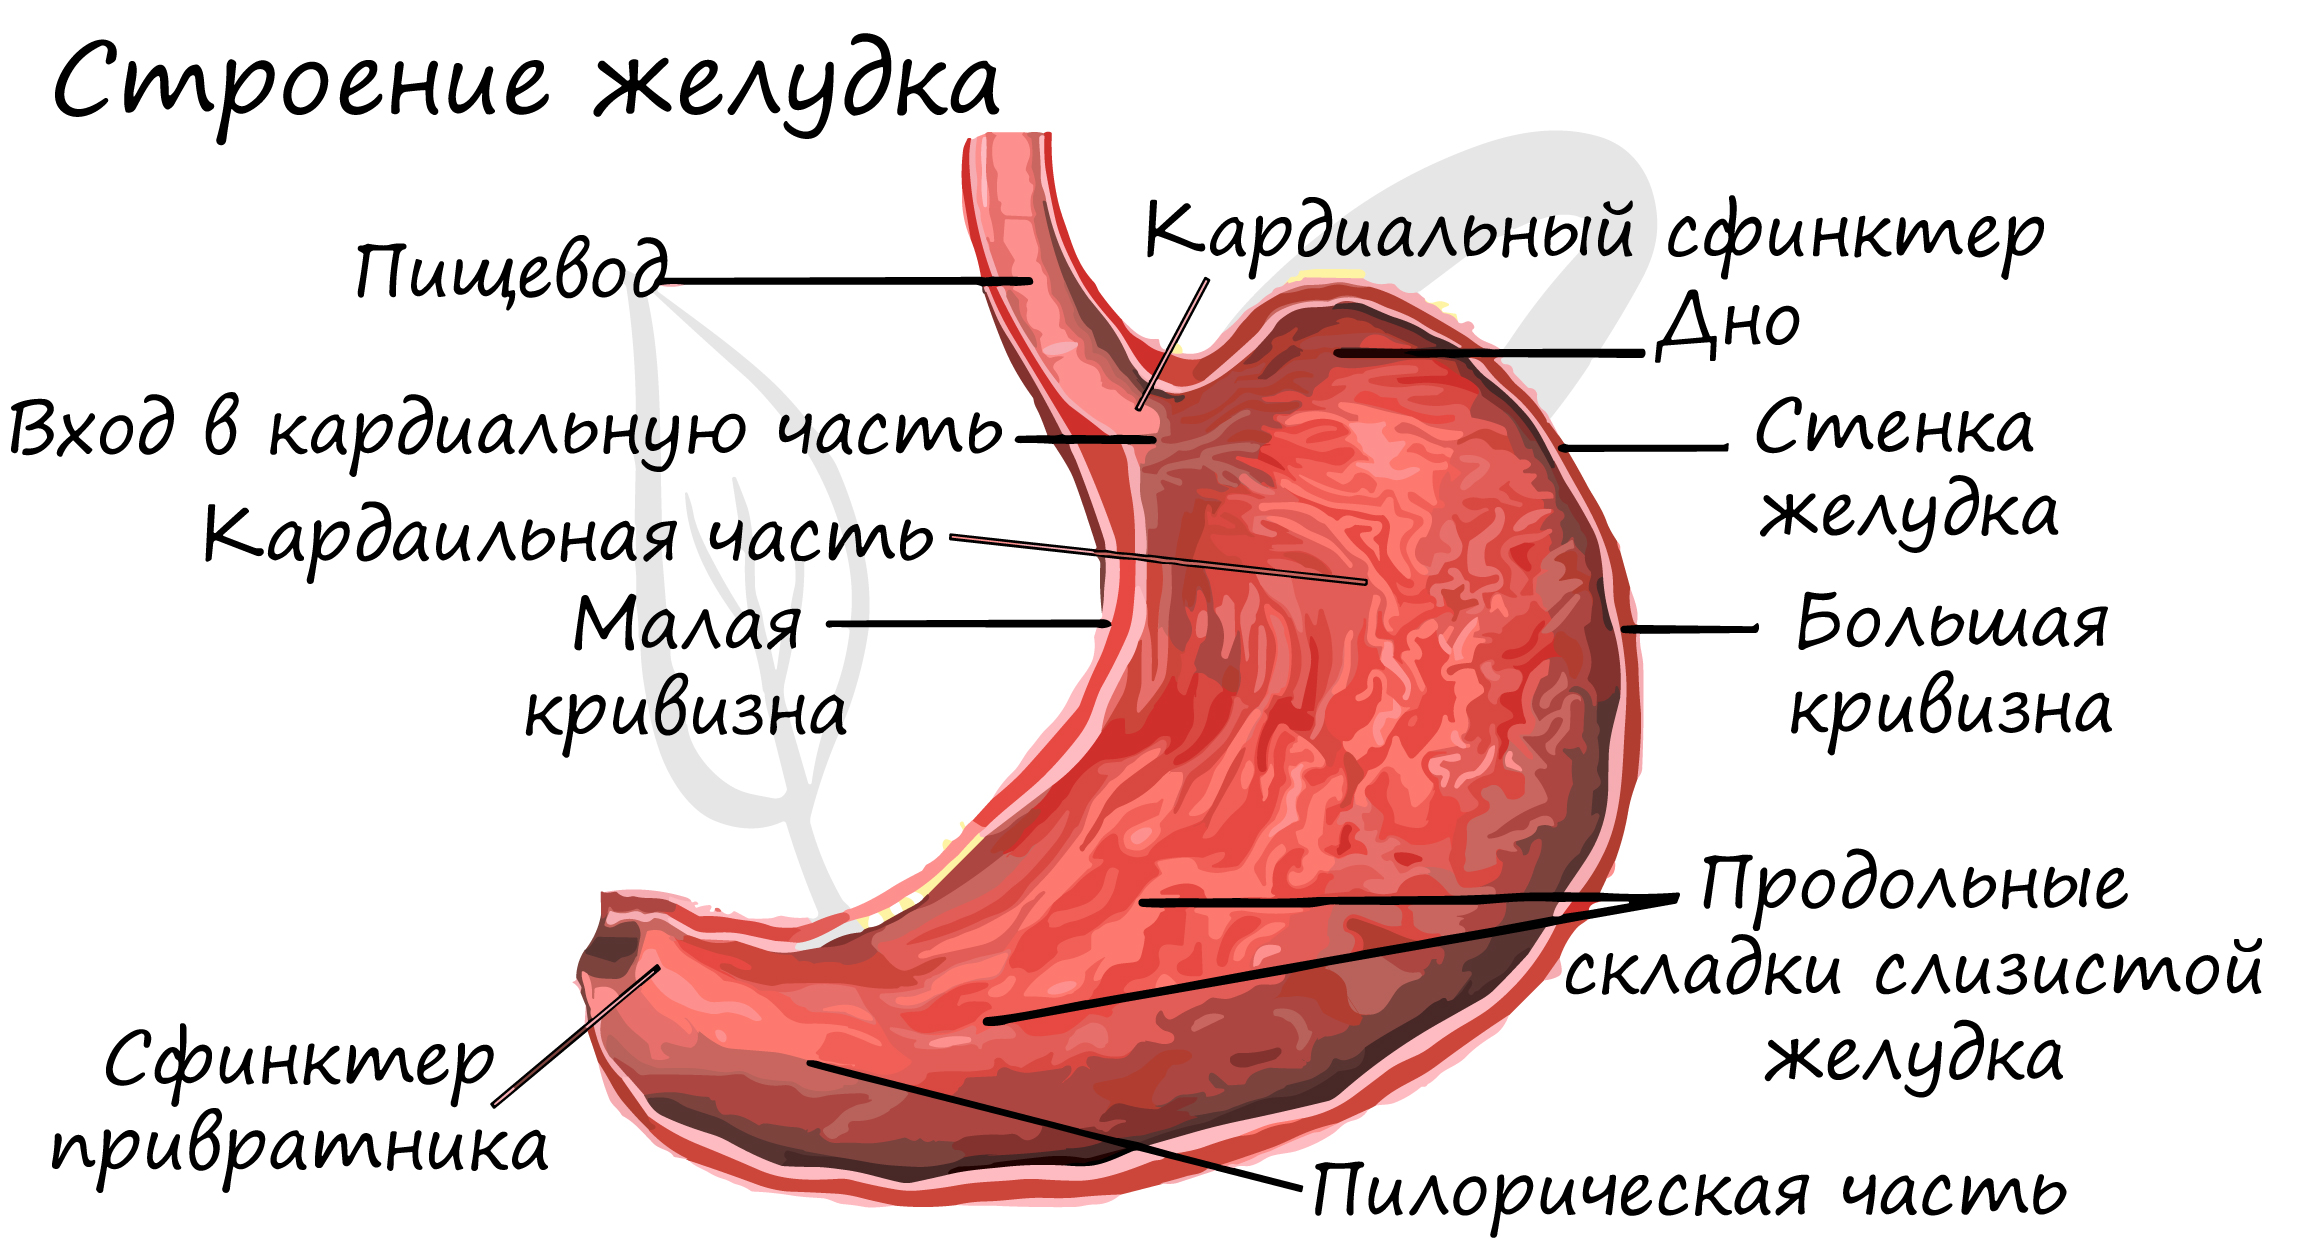 Отделы желудка. Складки пилорической части желудка. Строение желудка человека. Строение желудка 8 класс